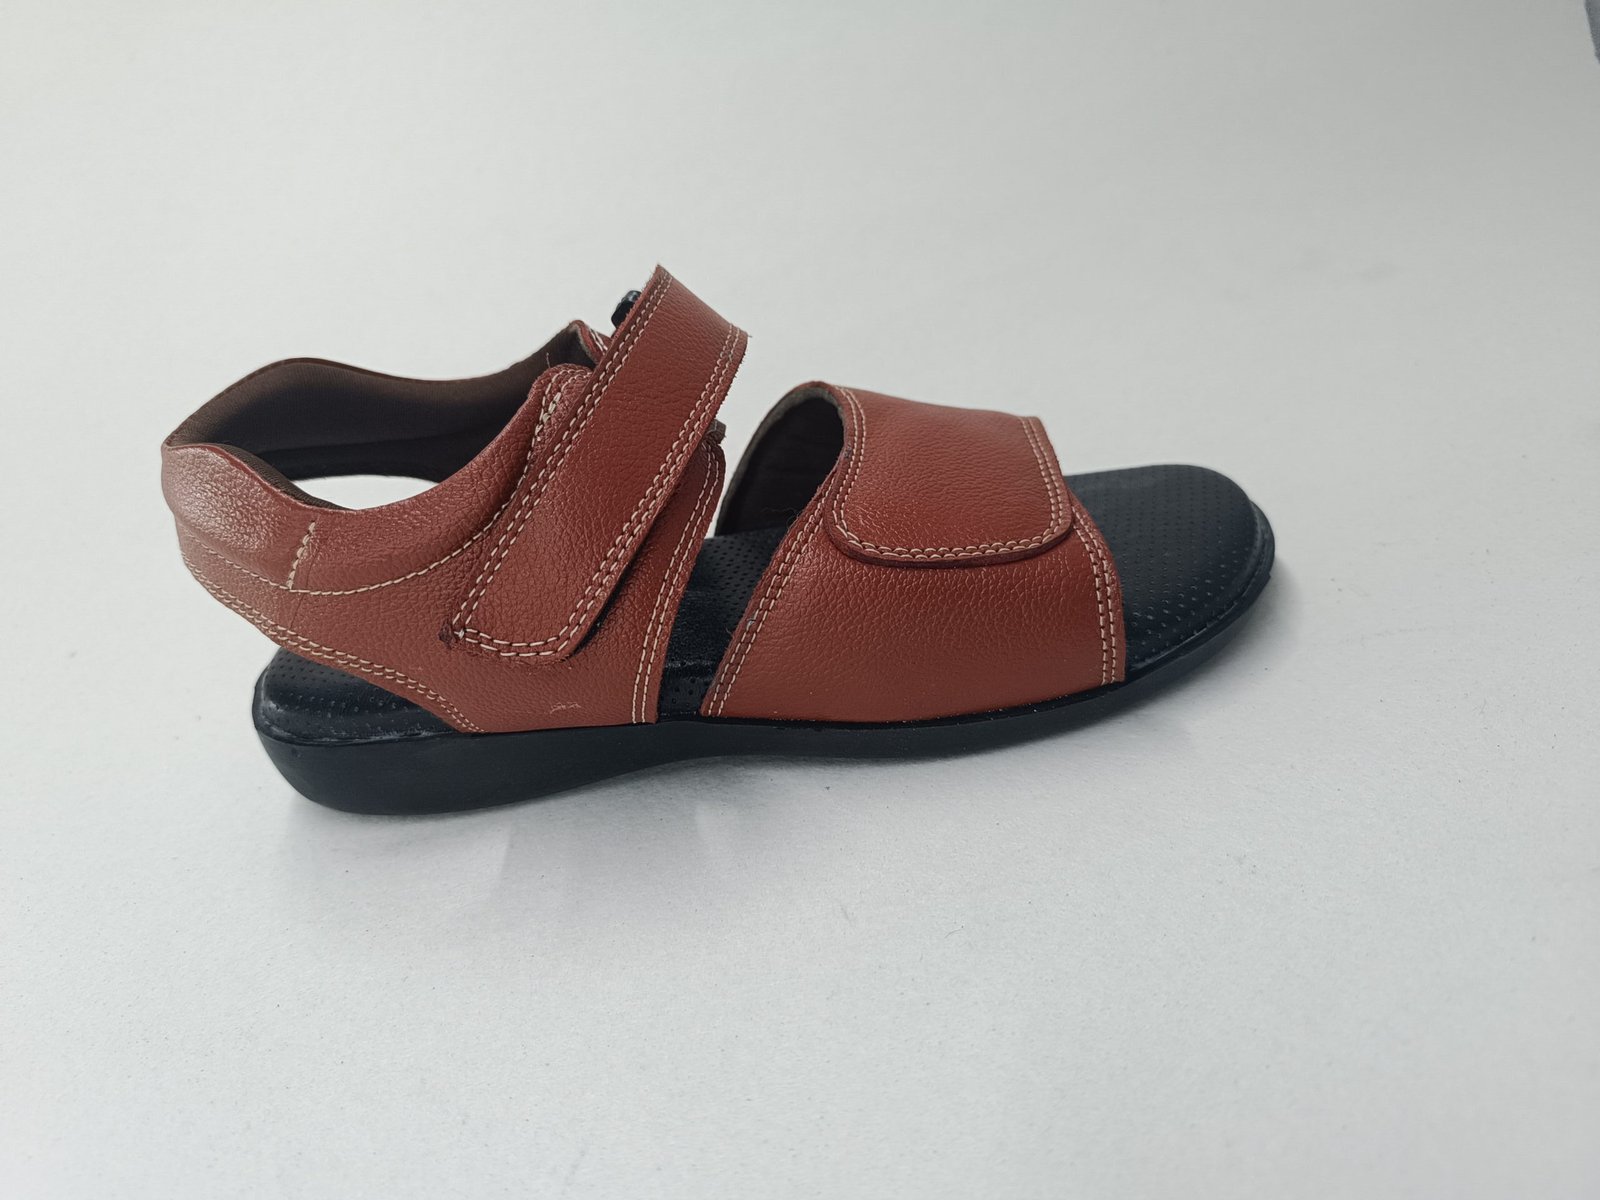 Buy PharmEasy Diabetic & Orthopedic women sandals (Fahion Range-2) Brown  Color, size 4 at Amazon.in